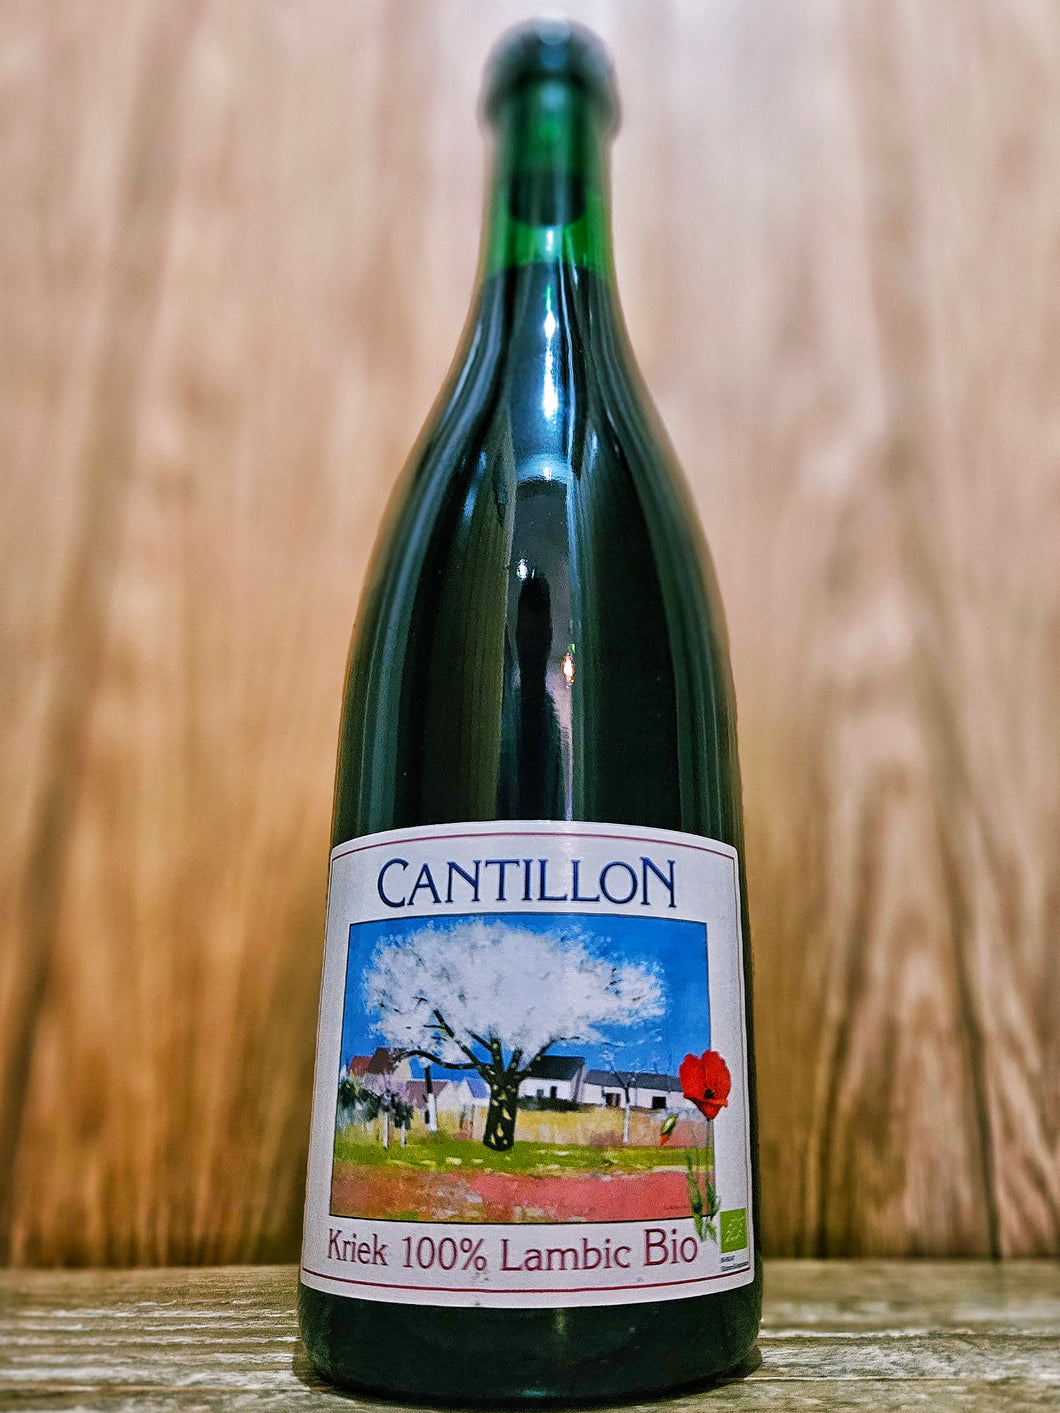 Cantillon - Kriek Bio